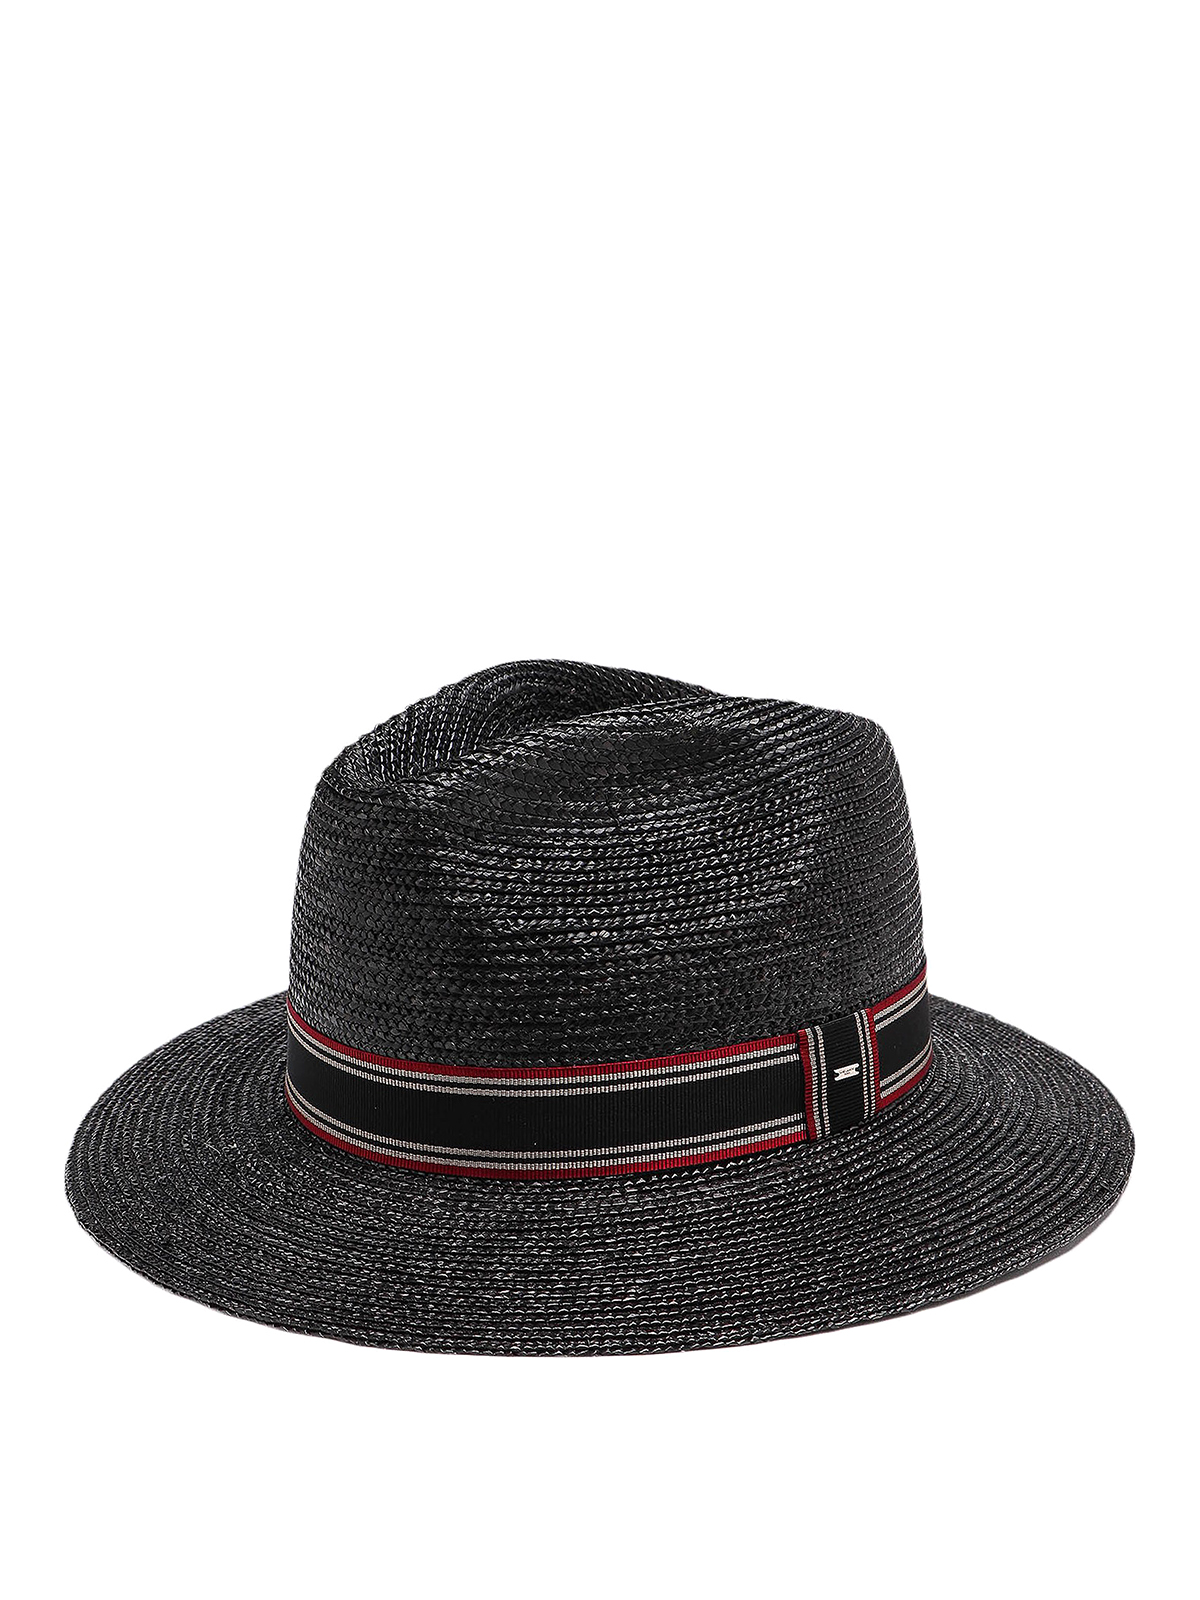 Raffinere Majestætisk Manager Hats & caps Saint Laurent - Straw Panama hat with canvas ribbon -  6087594YB831000